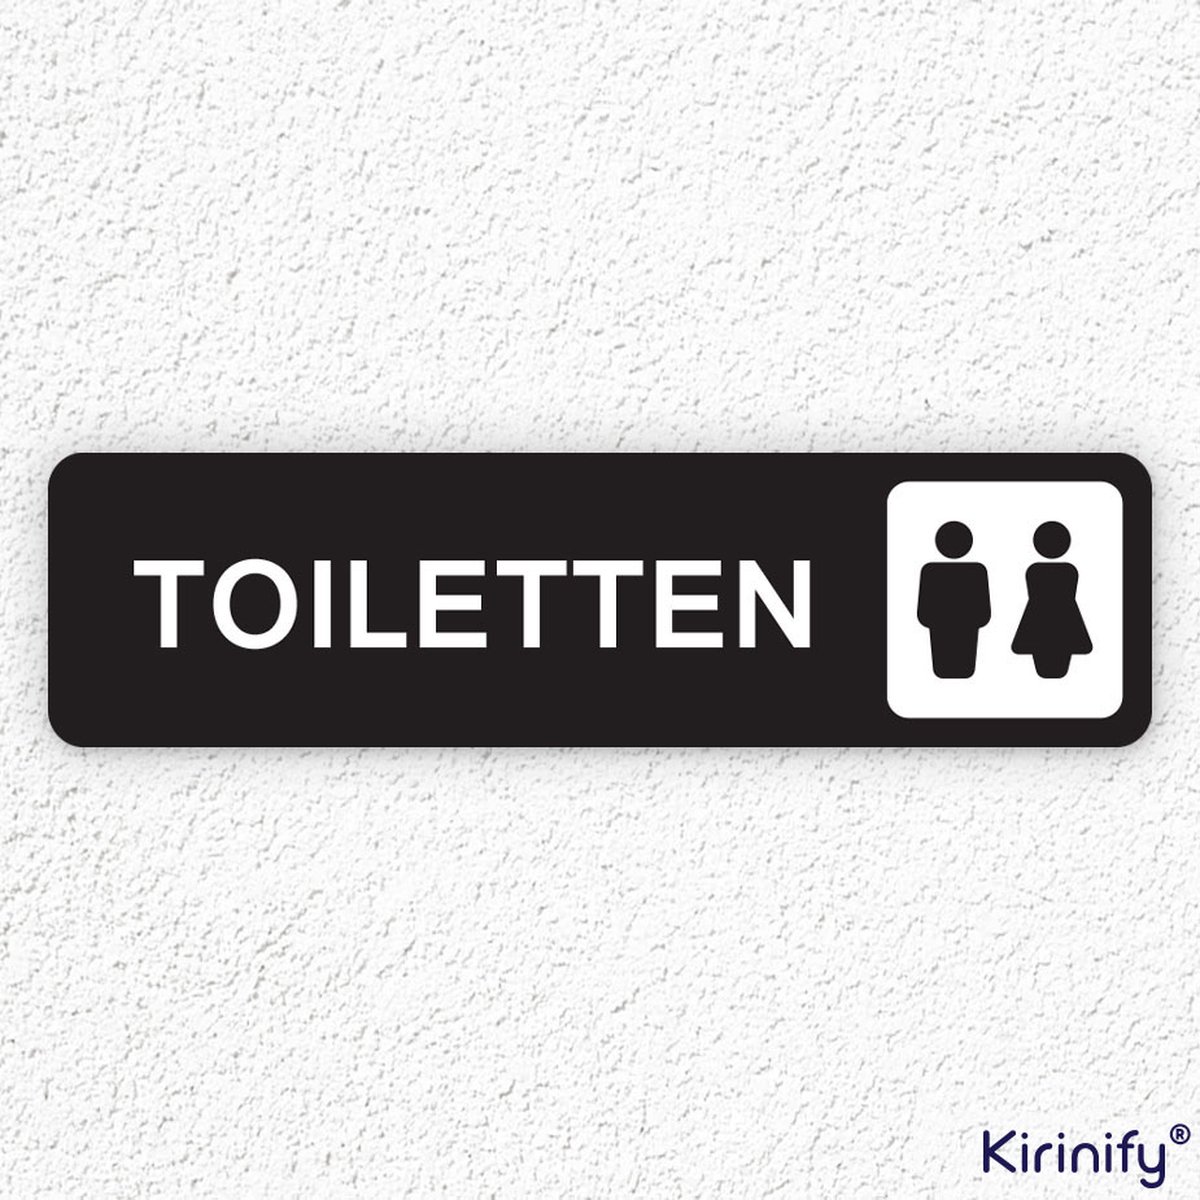 Kirinify - WC Bordje 15 x 4 cm - Toiletten man vrouw - Zelfklevend zwart toilet bordje - Gegraveerd